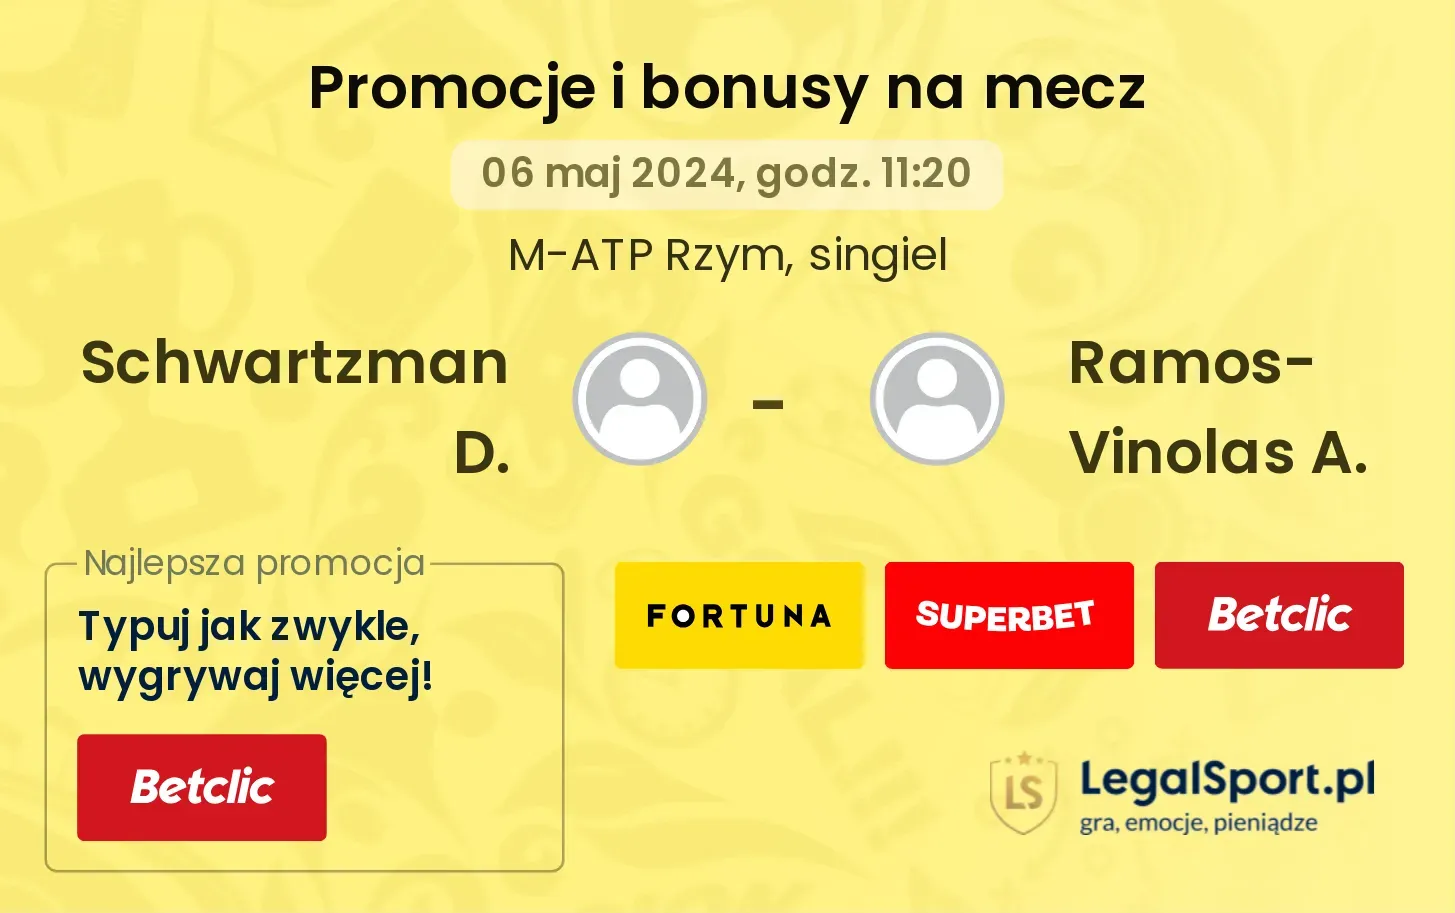 Schwartzman D. - Ramos-Vinolas A. promocje bonusy na mecz